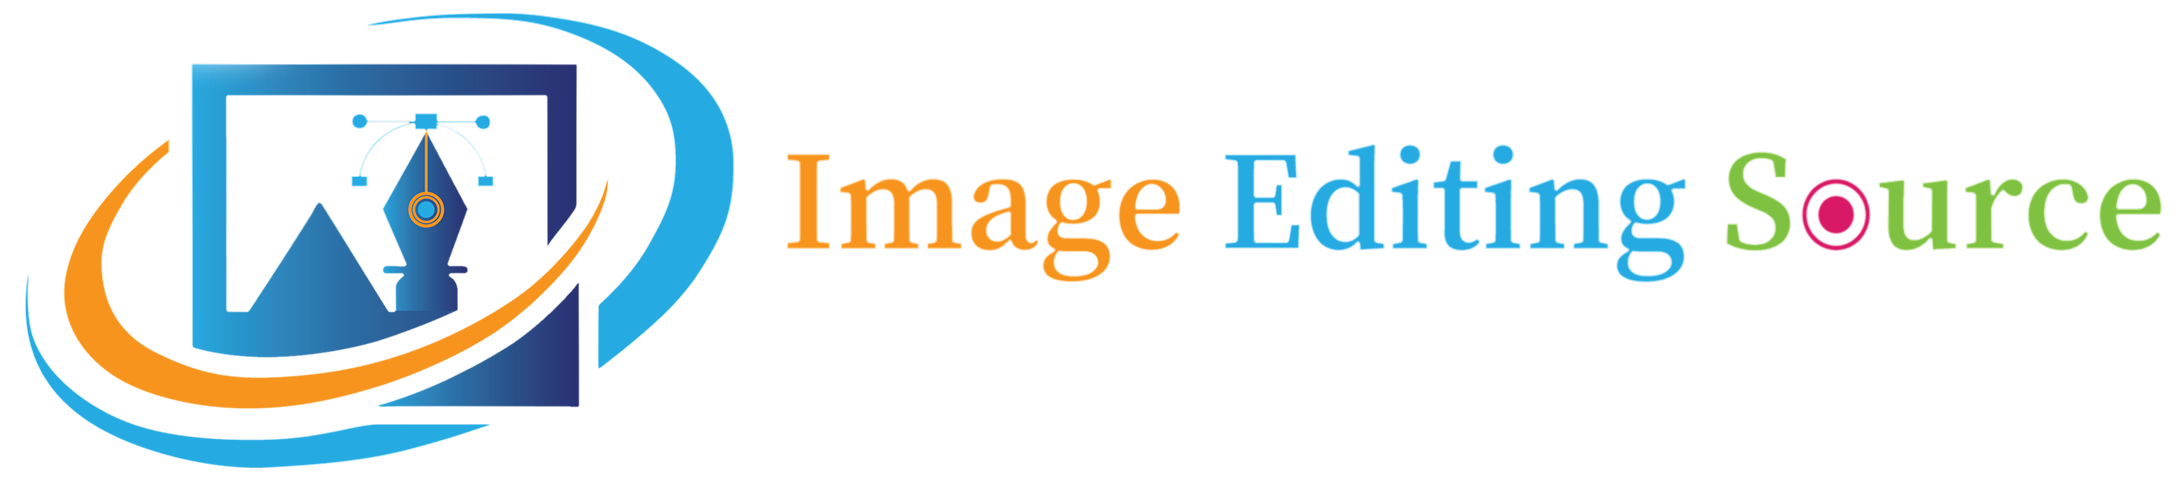 Image-editing-sourse logo